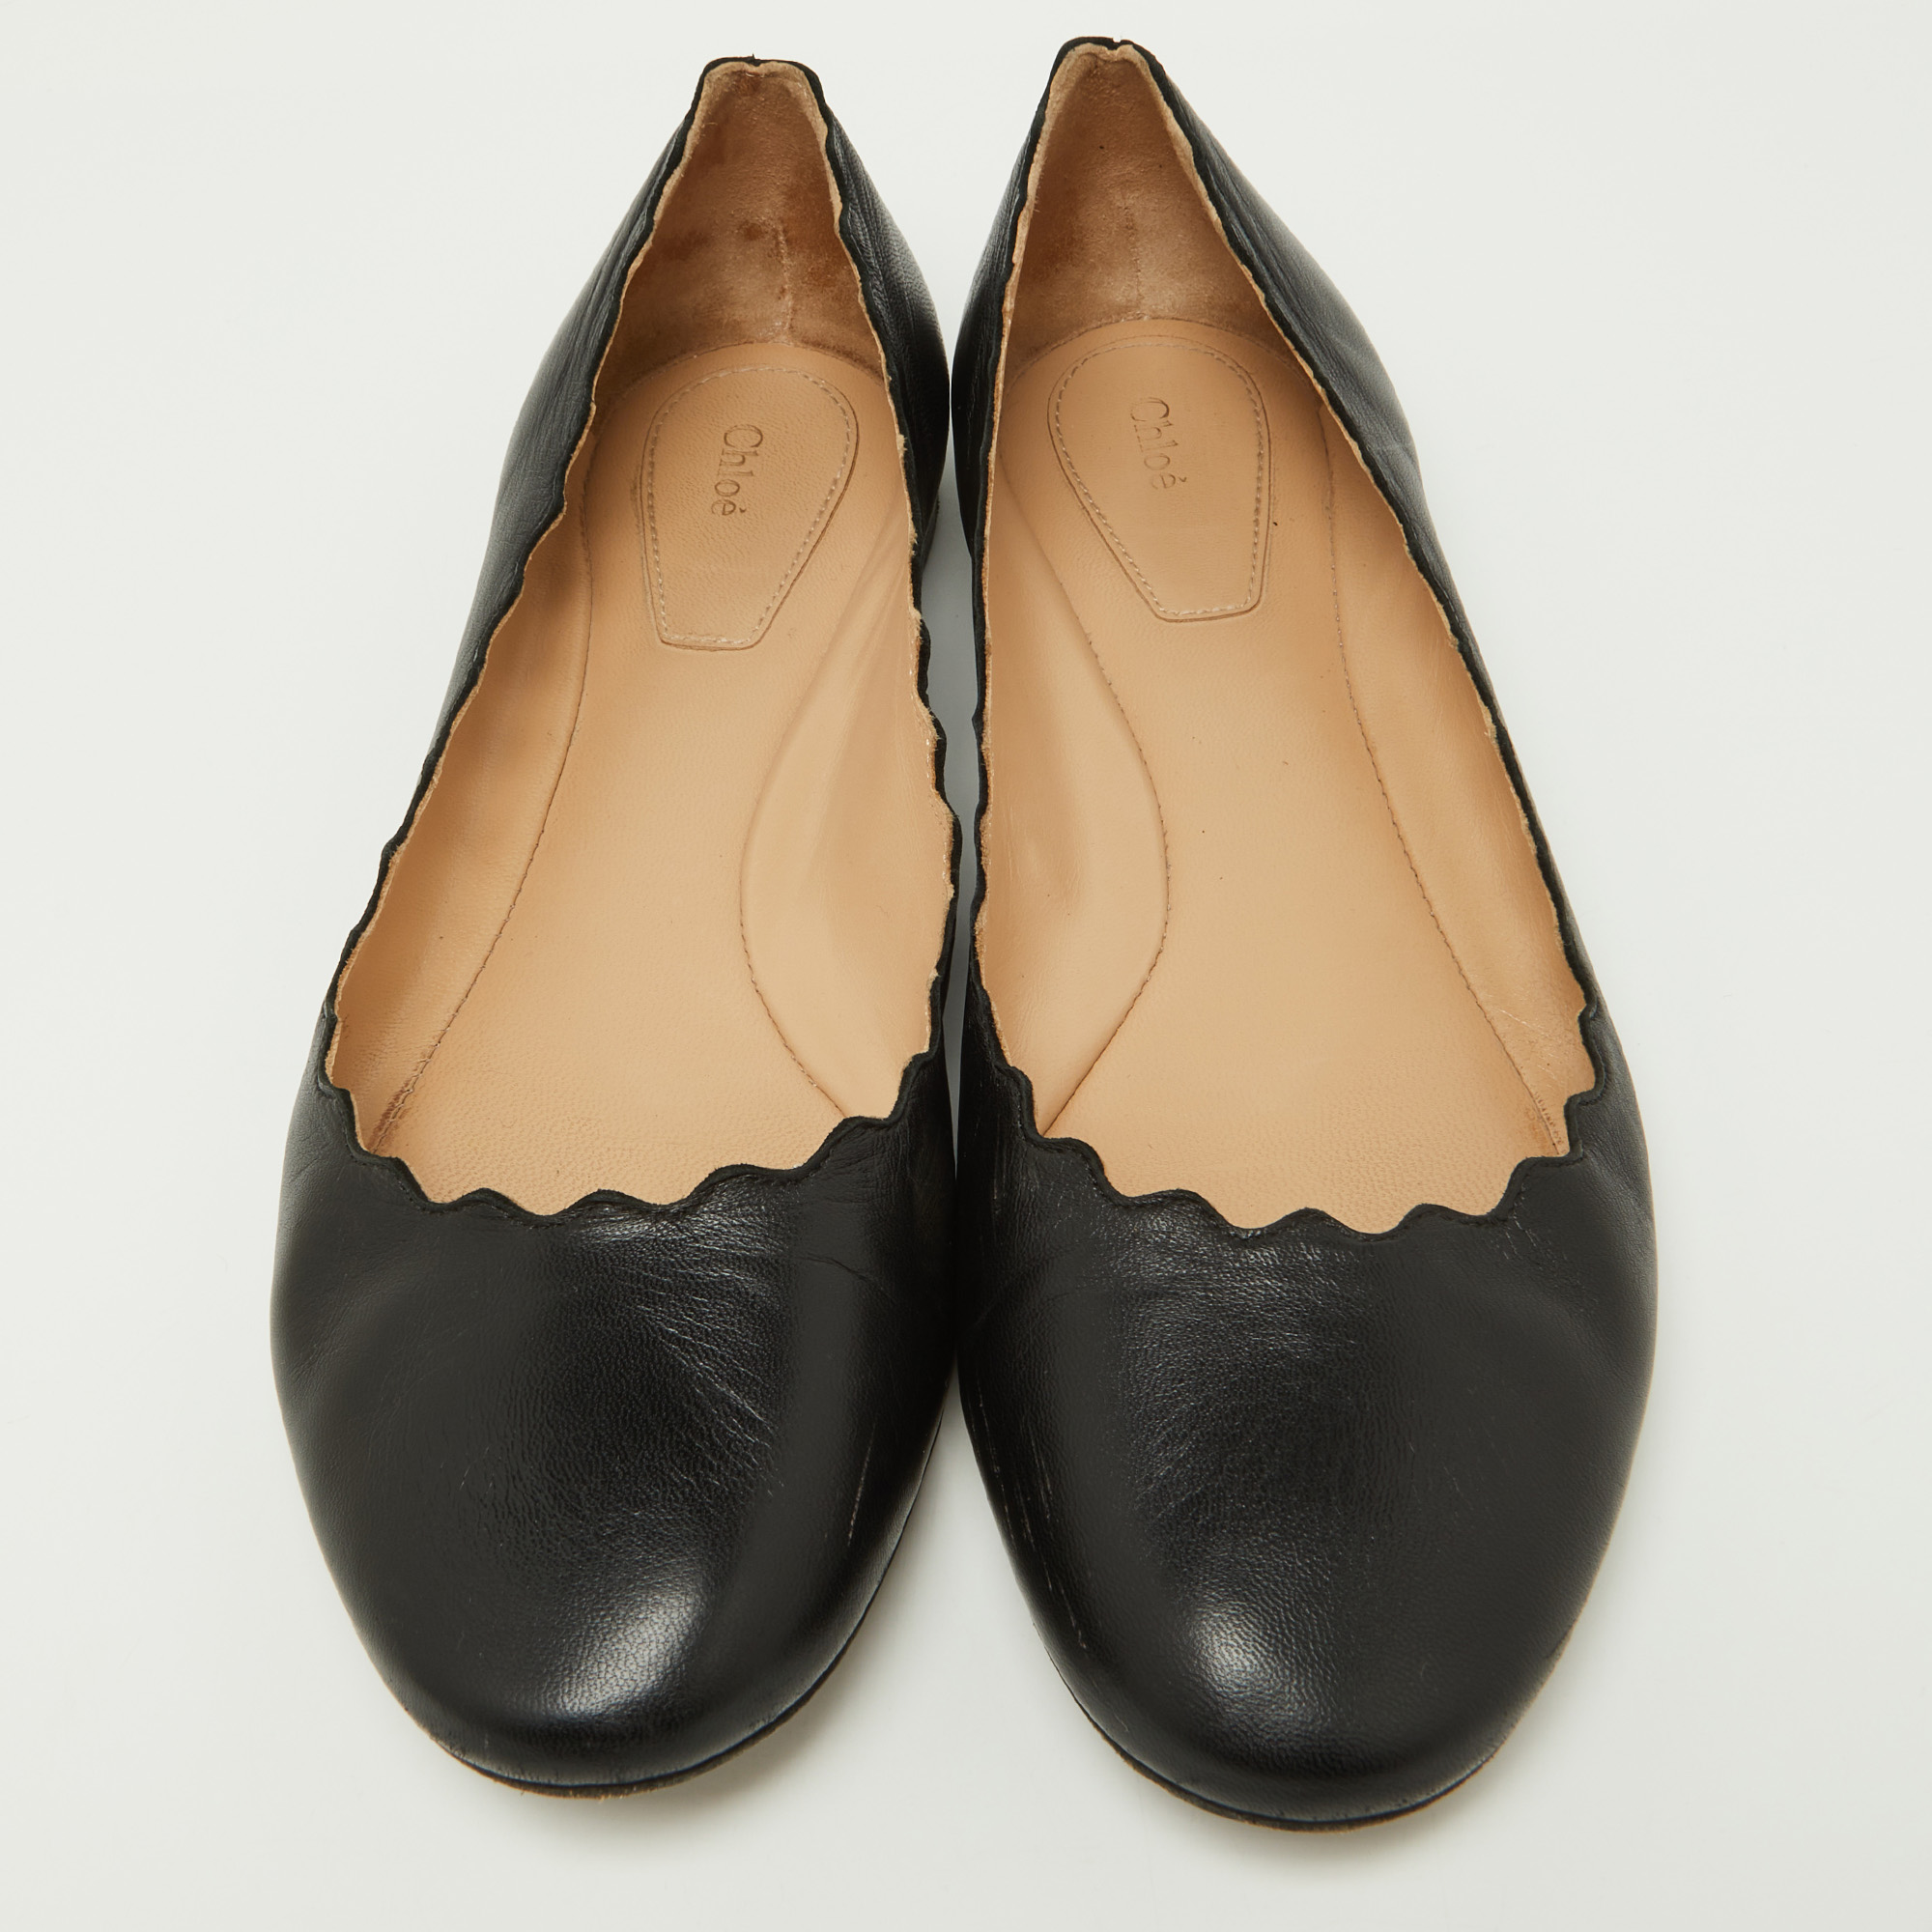 Chloe Black Scalloped Leather Lauren Ballet Flats Size 38.5